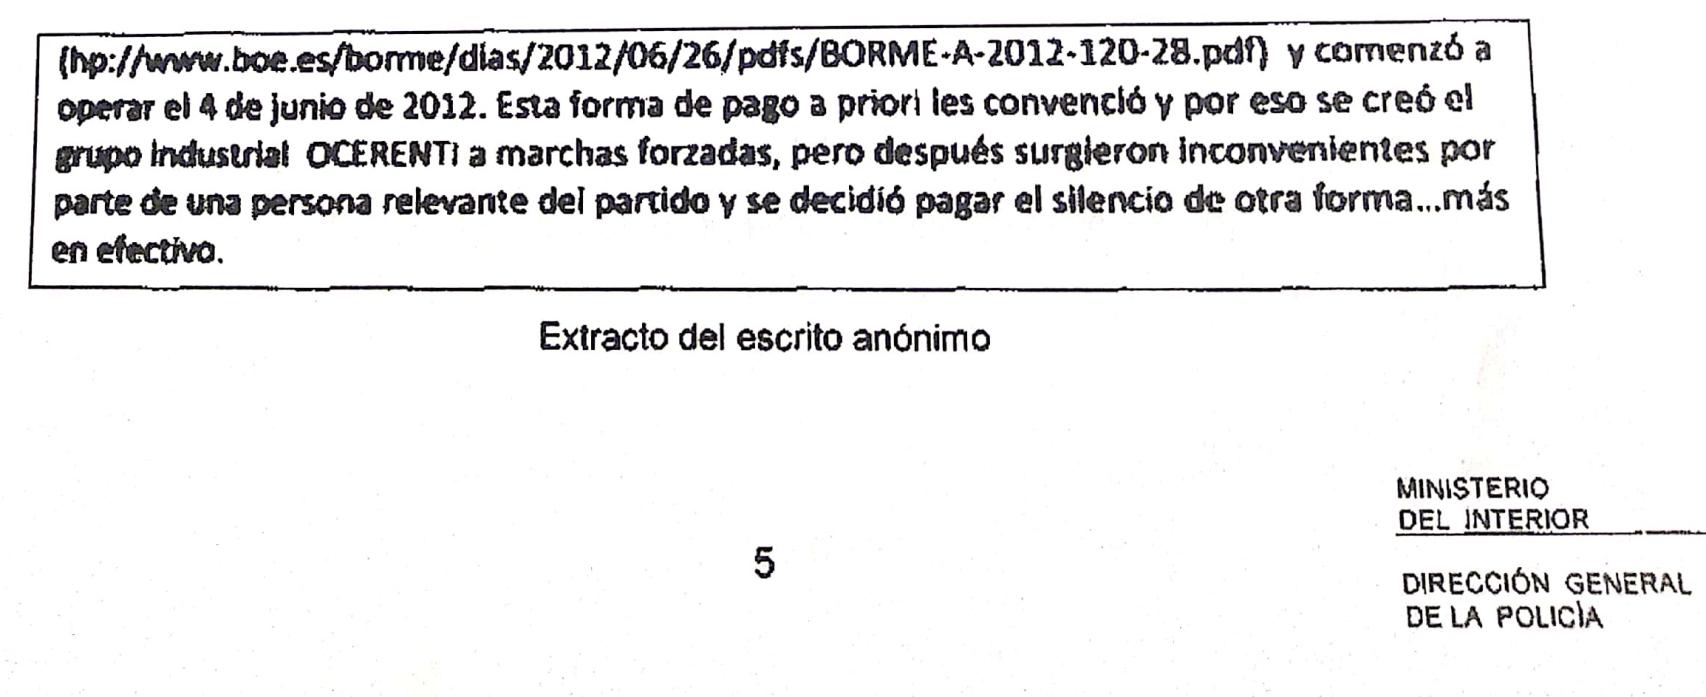 Extracto del manuscrito anónimo remitido al juez José De la Mata.